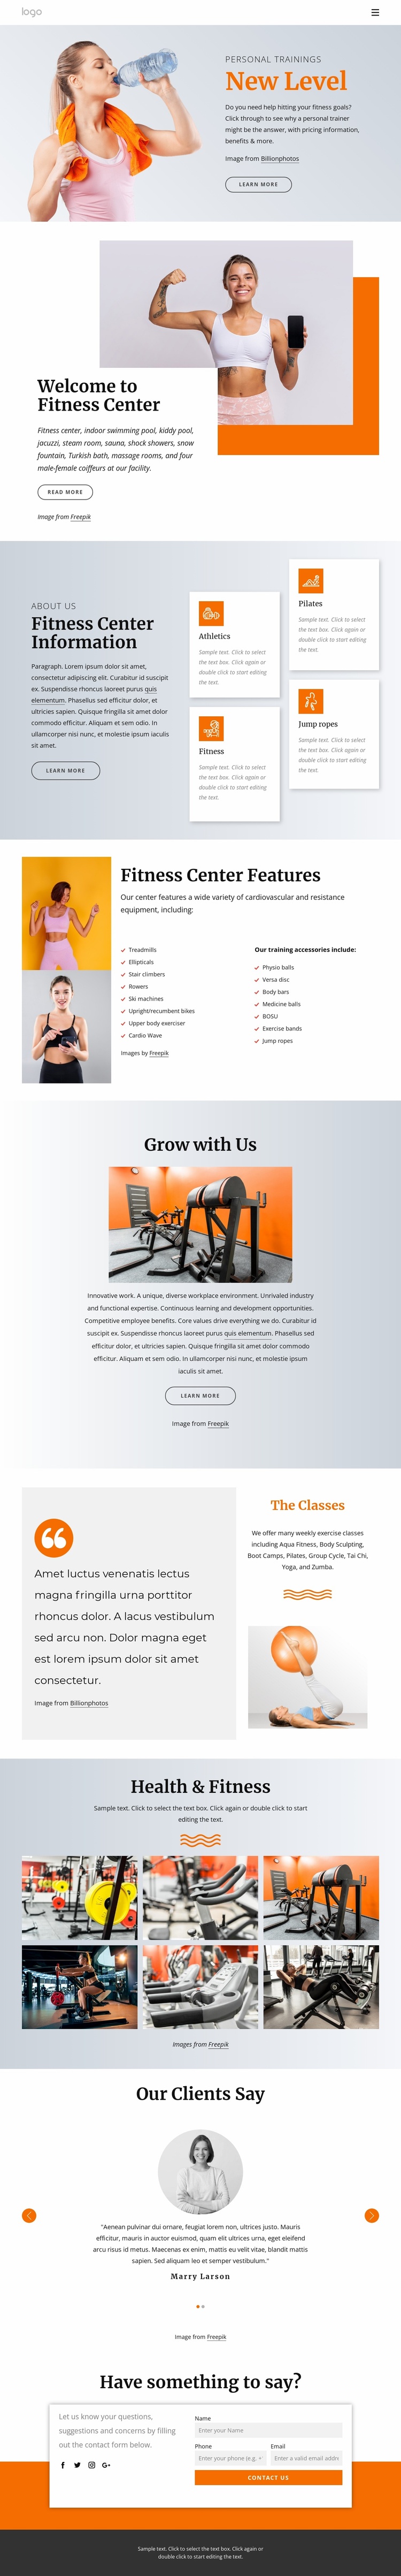 24 hour fitness center Ecommerce Website Design